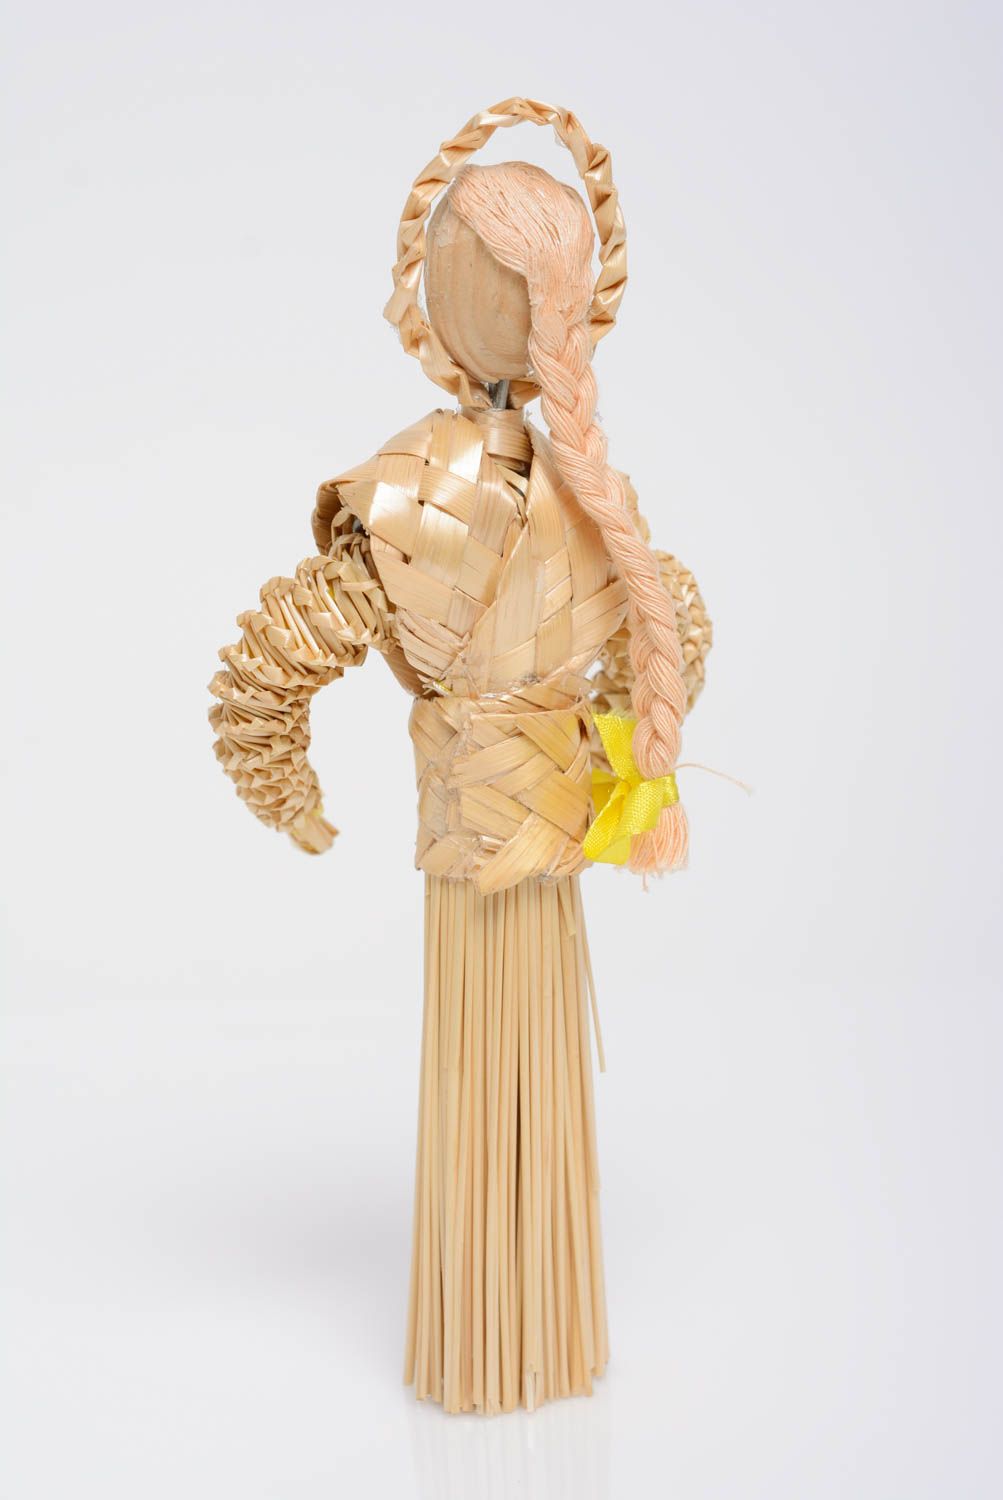 Wicker doll amulet made of straw handmade beautiful designer interior decor photo 3